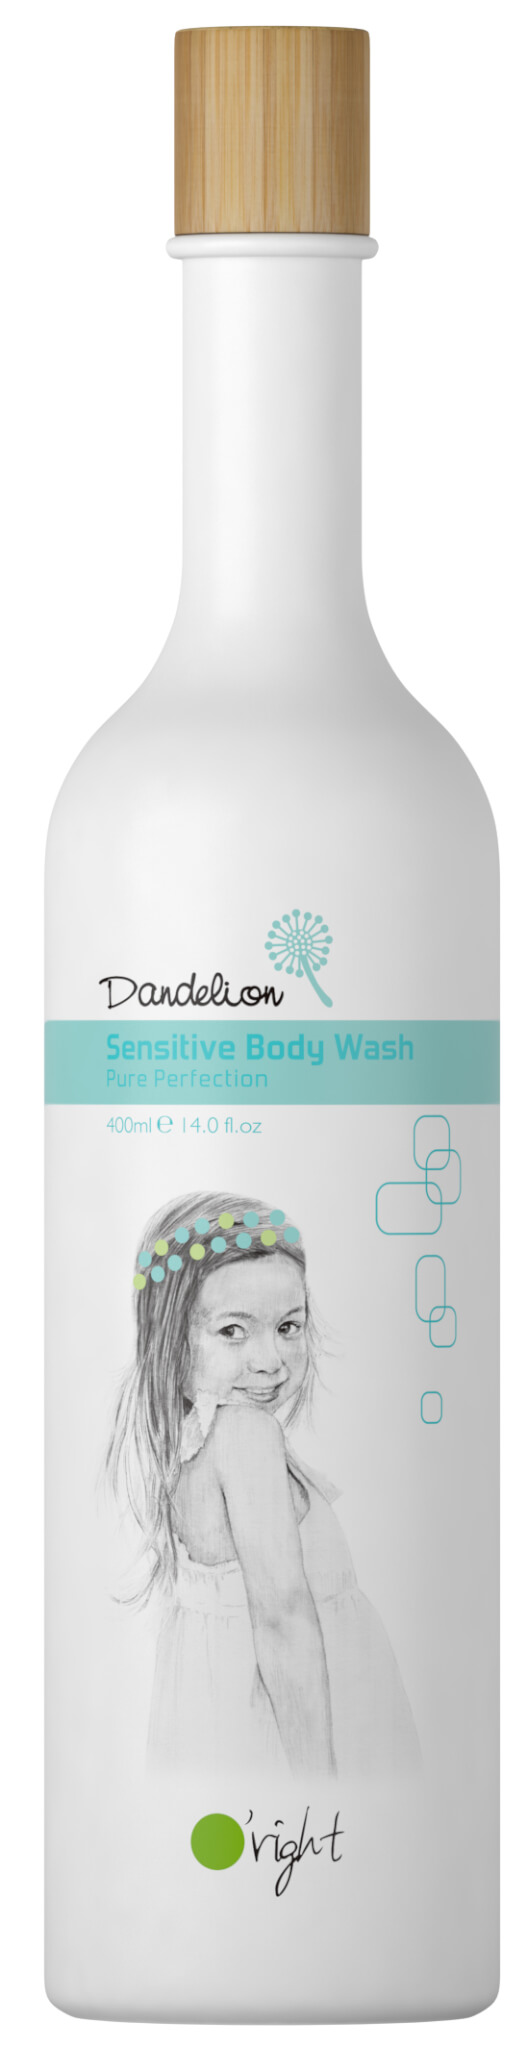 Dandelion Sensitive Body Wash 400ml